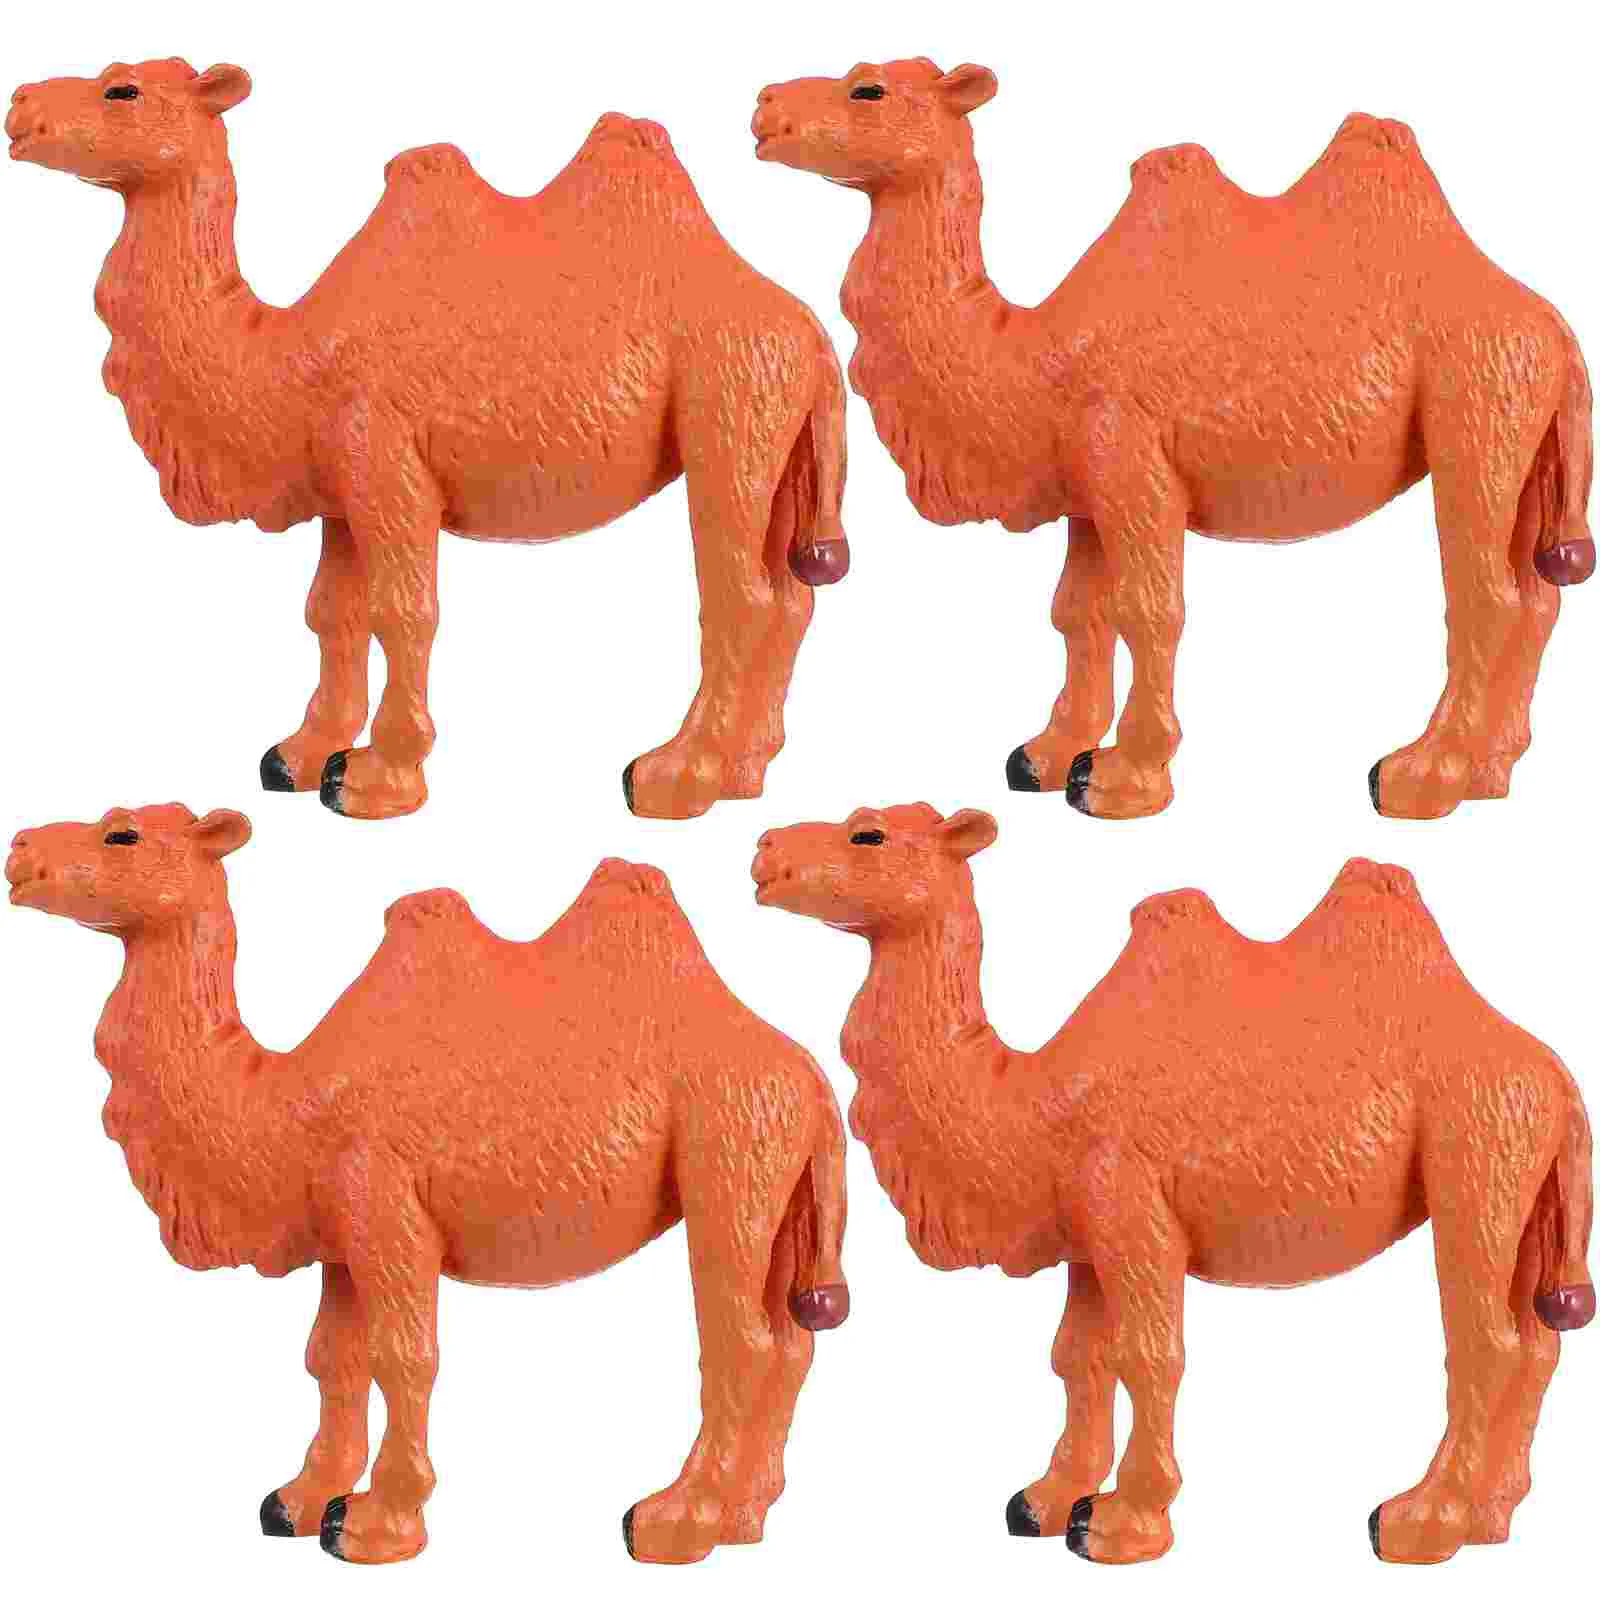 

4 Pcs Miniature Camel Models Realistic Camel Figurines Animal Models Desktop Ornaments Kids Toys